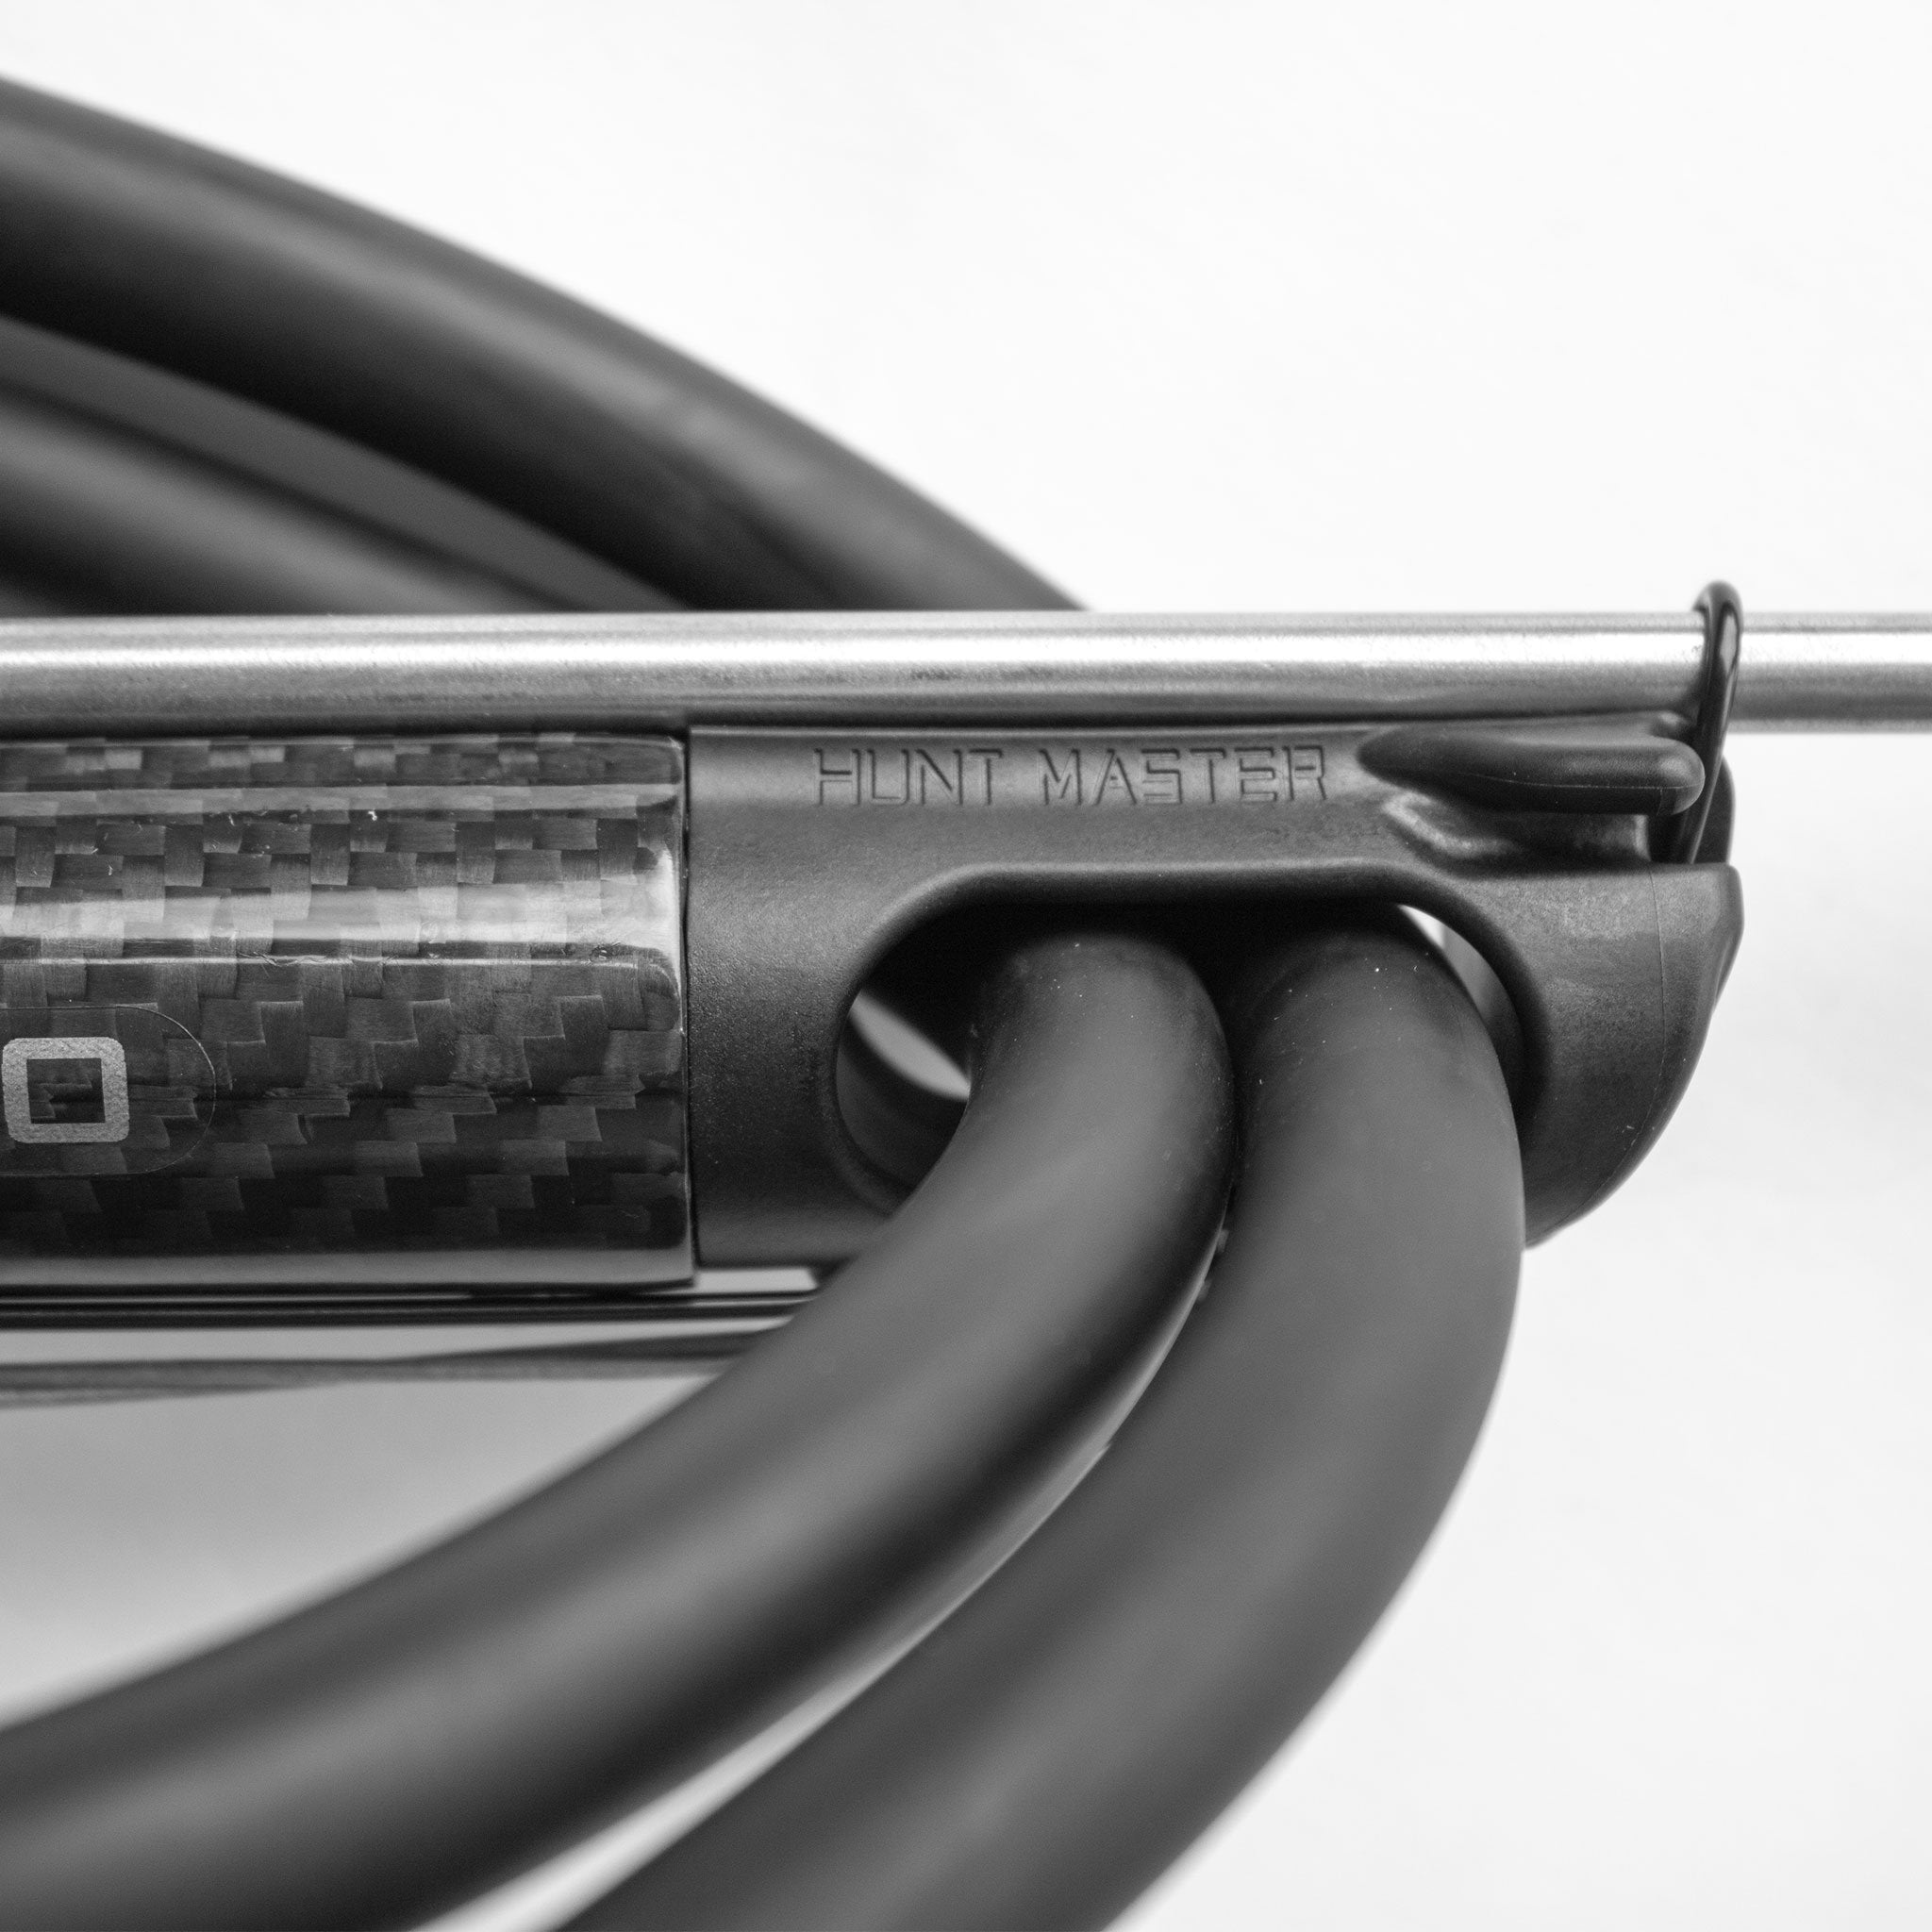 GALARRA Carbon Fibre Speargun - Open Head - Gloss Finish - 55cm-130cm